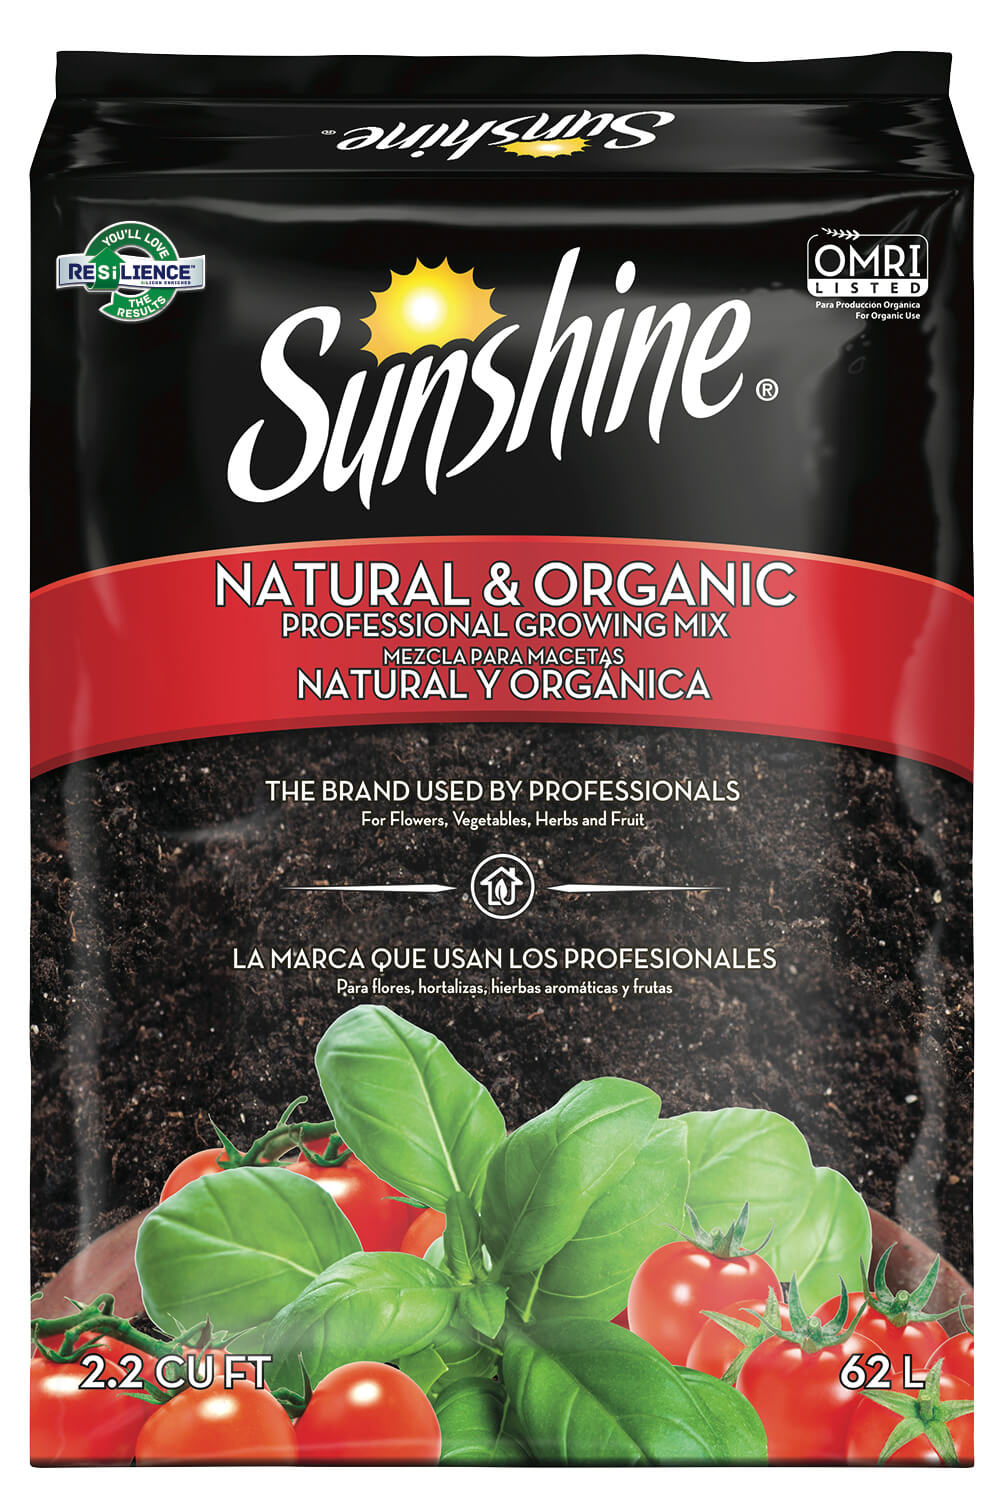 Sunshine Natural & Organic Professional Growing Mix pack